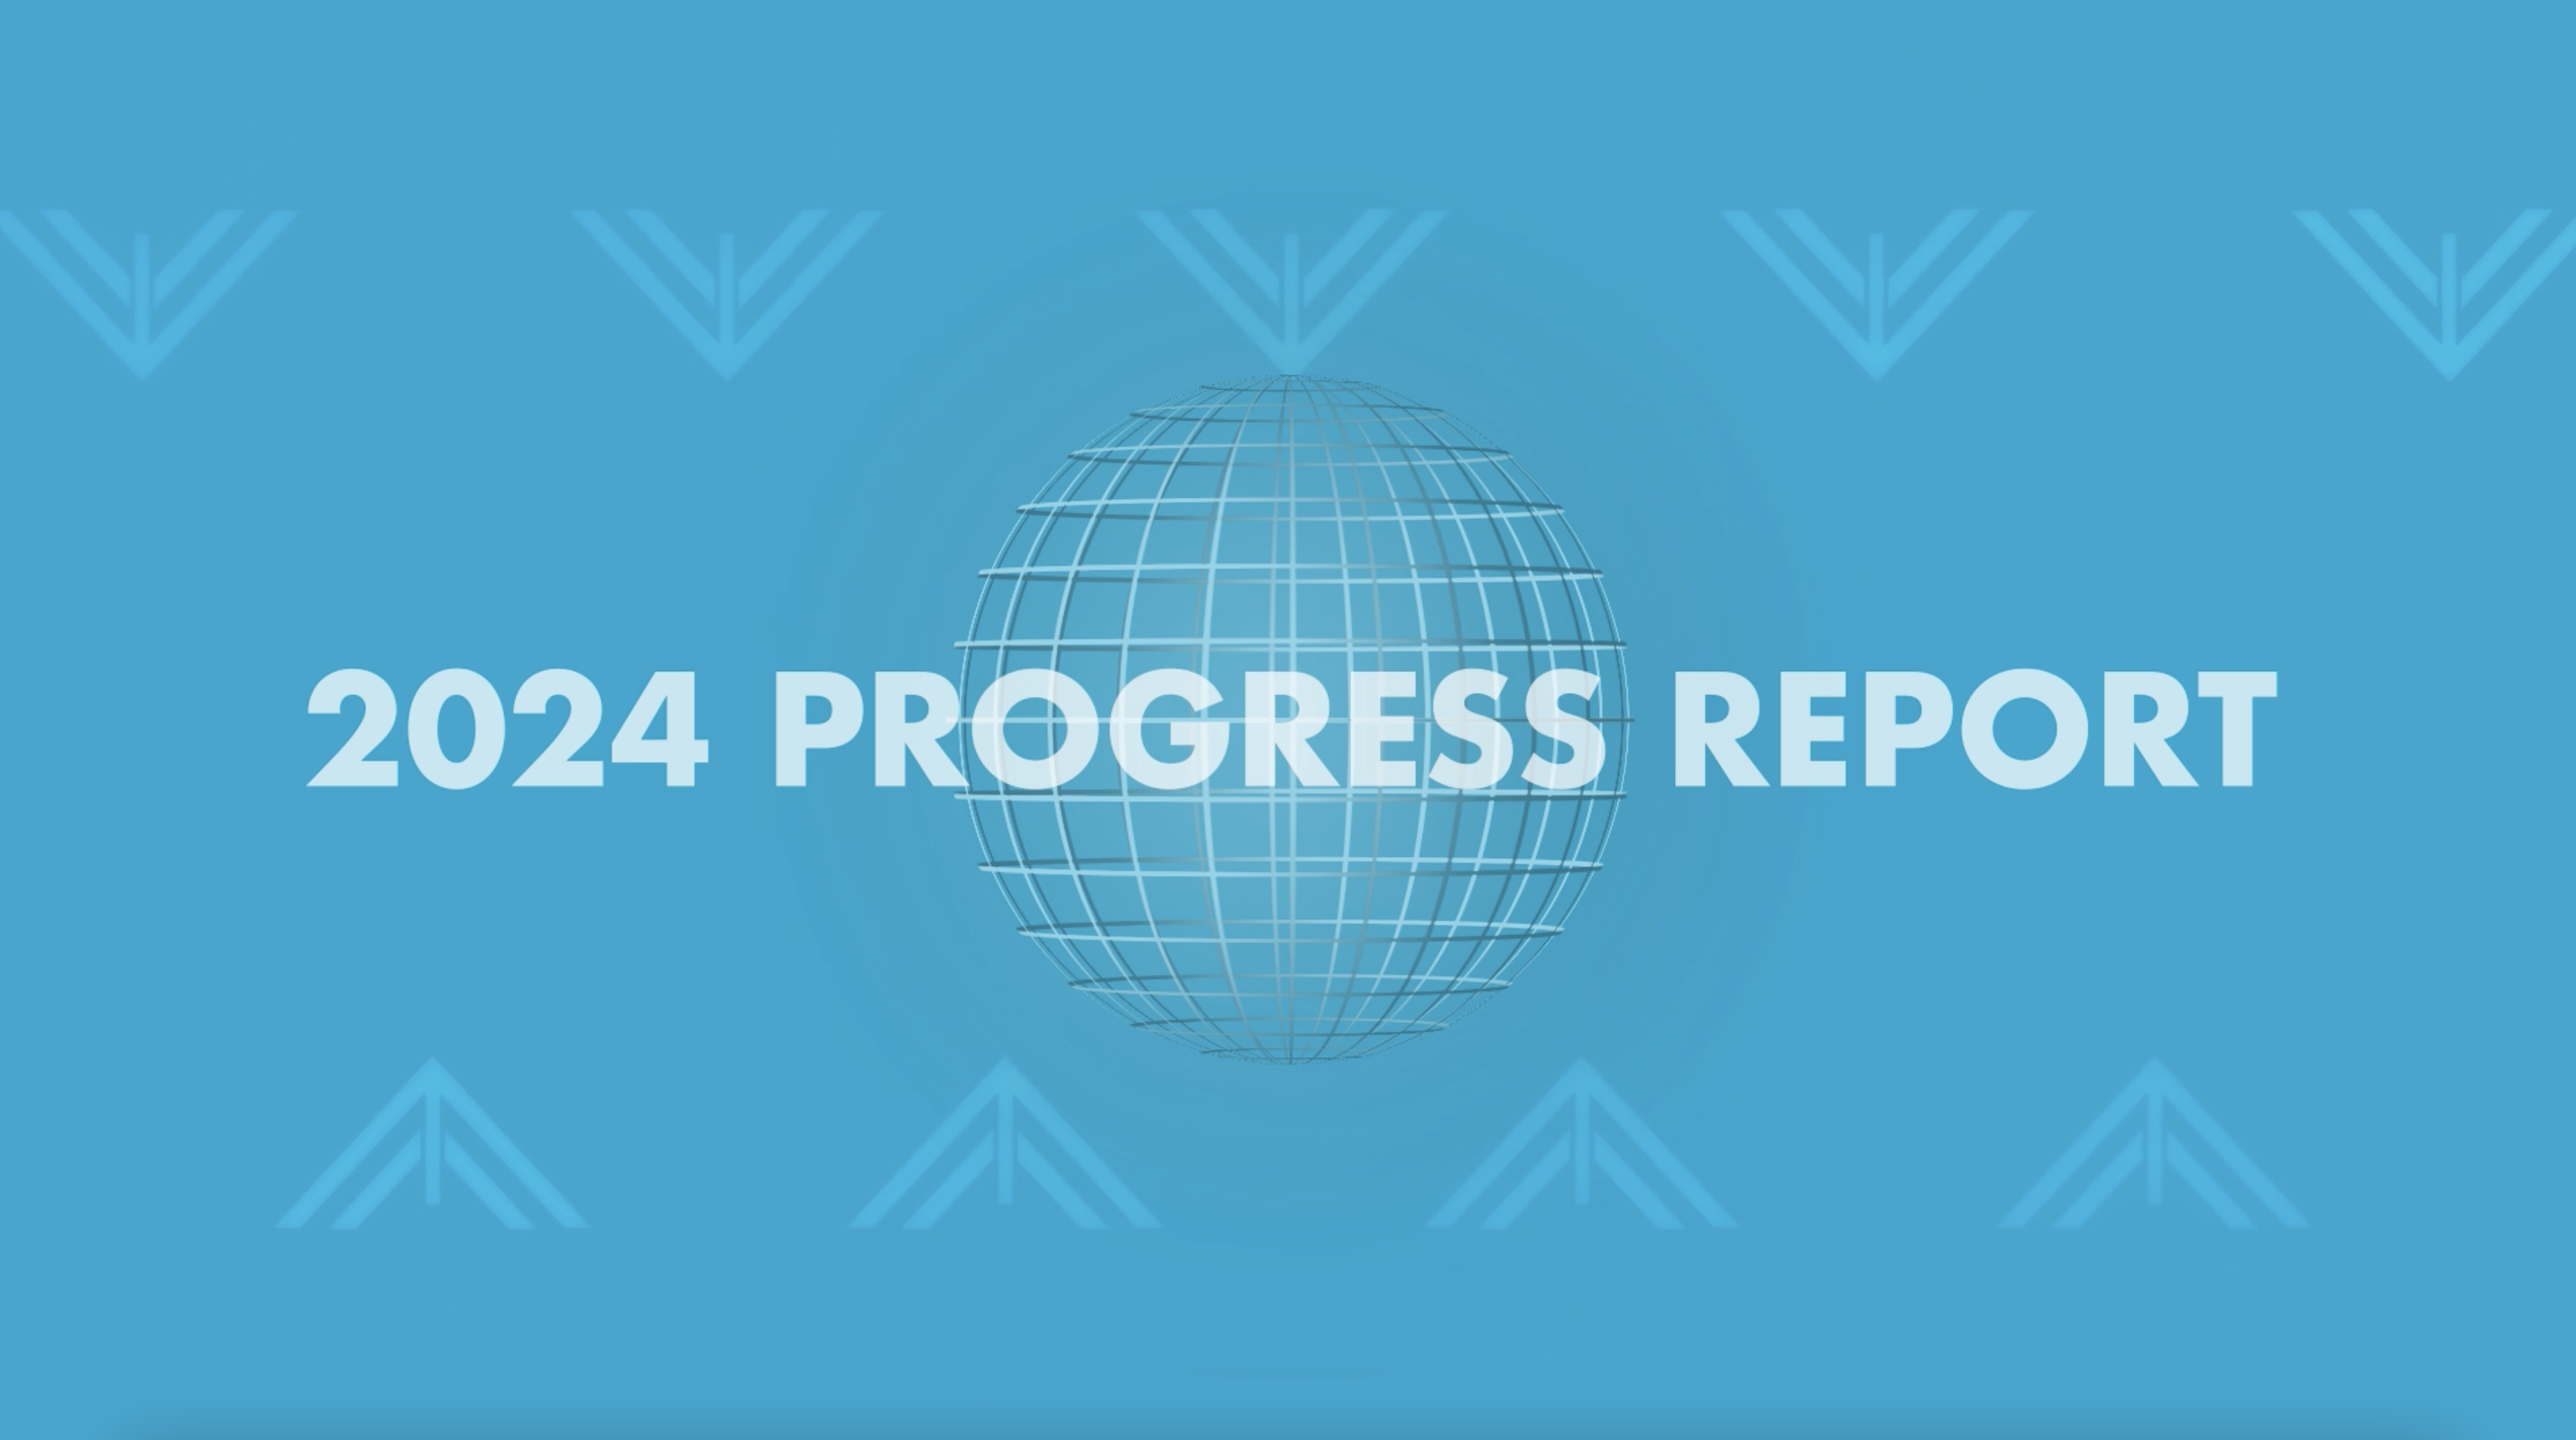 Title screen of the International Progressive MS Alliance 2024 Progress Report